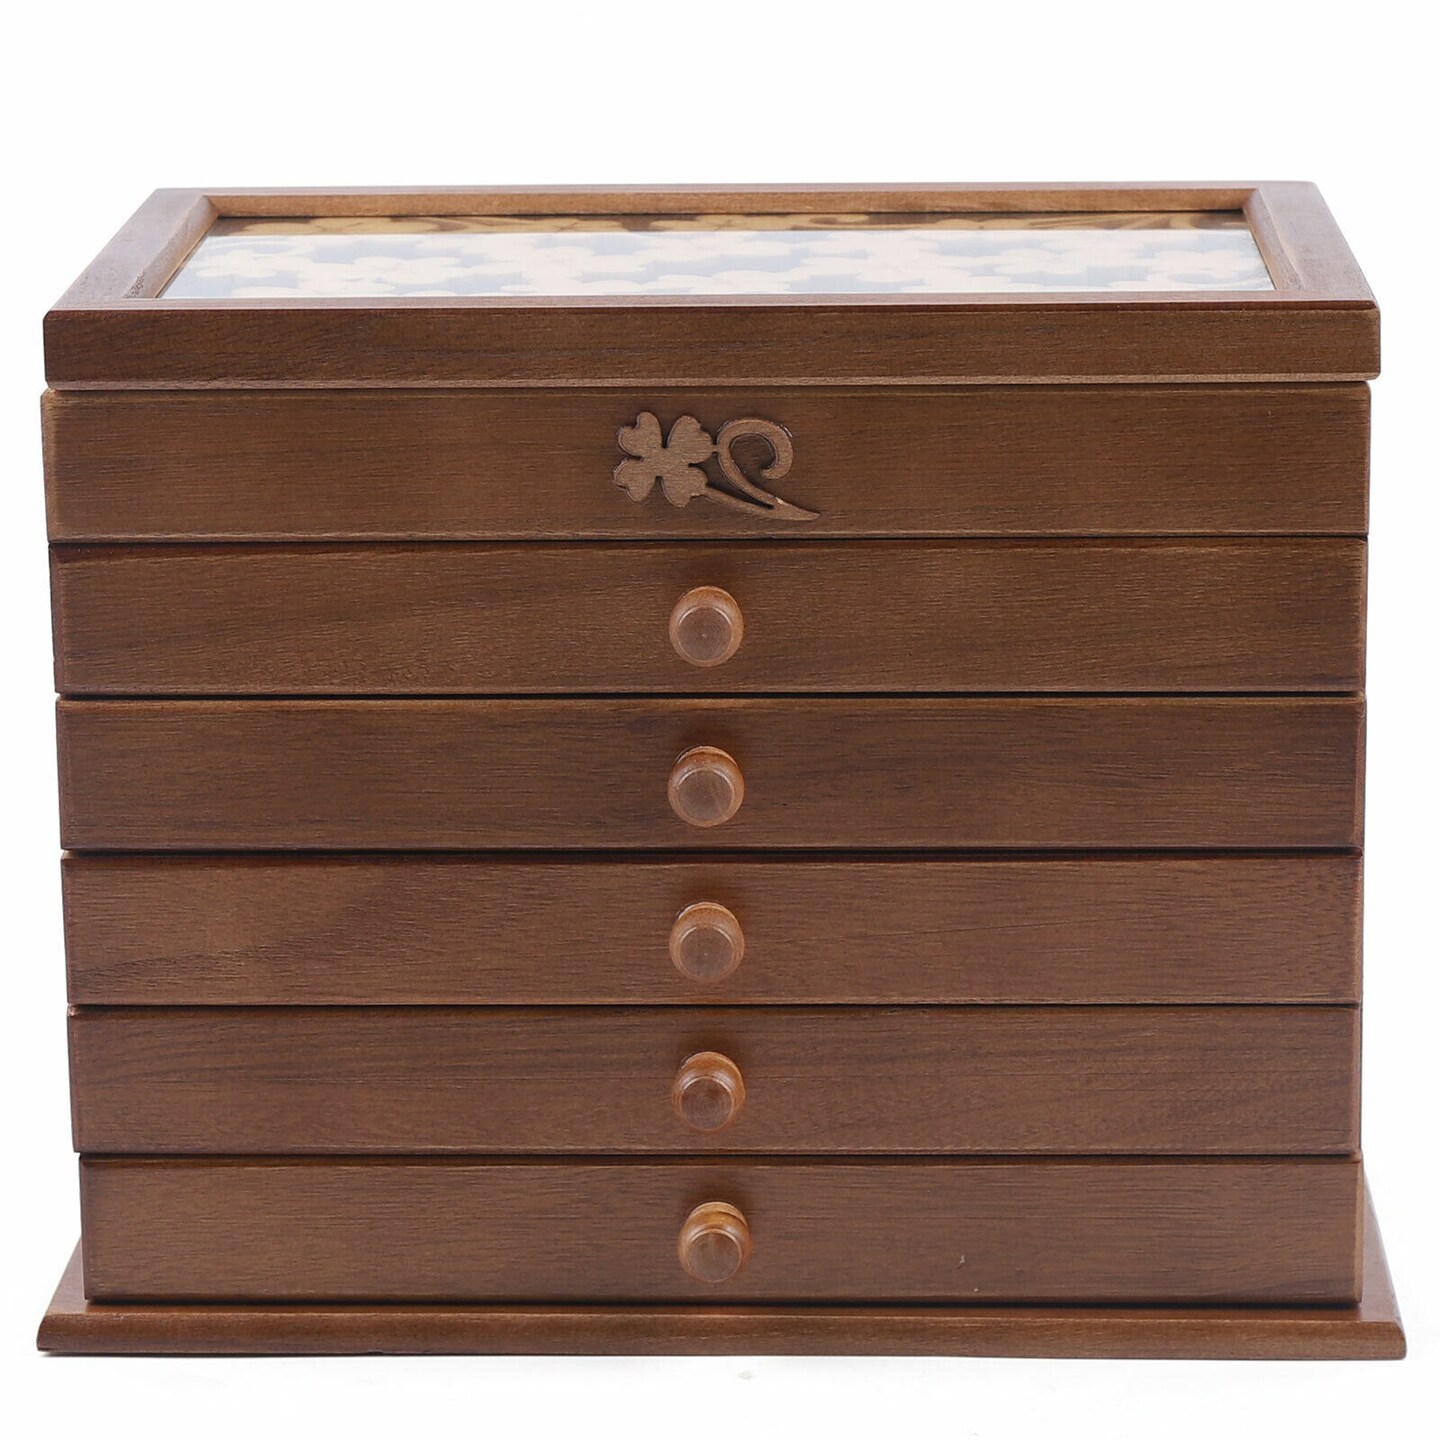 6 Layers Case Plus 5 Drawer Wooden Storage Box